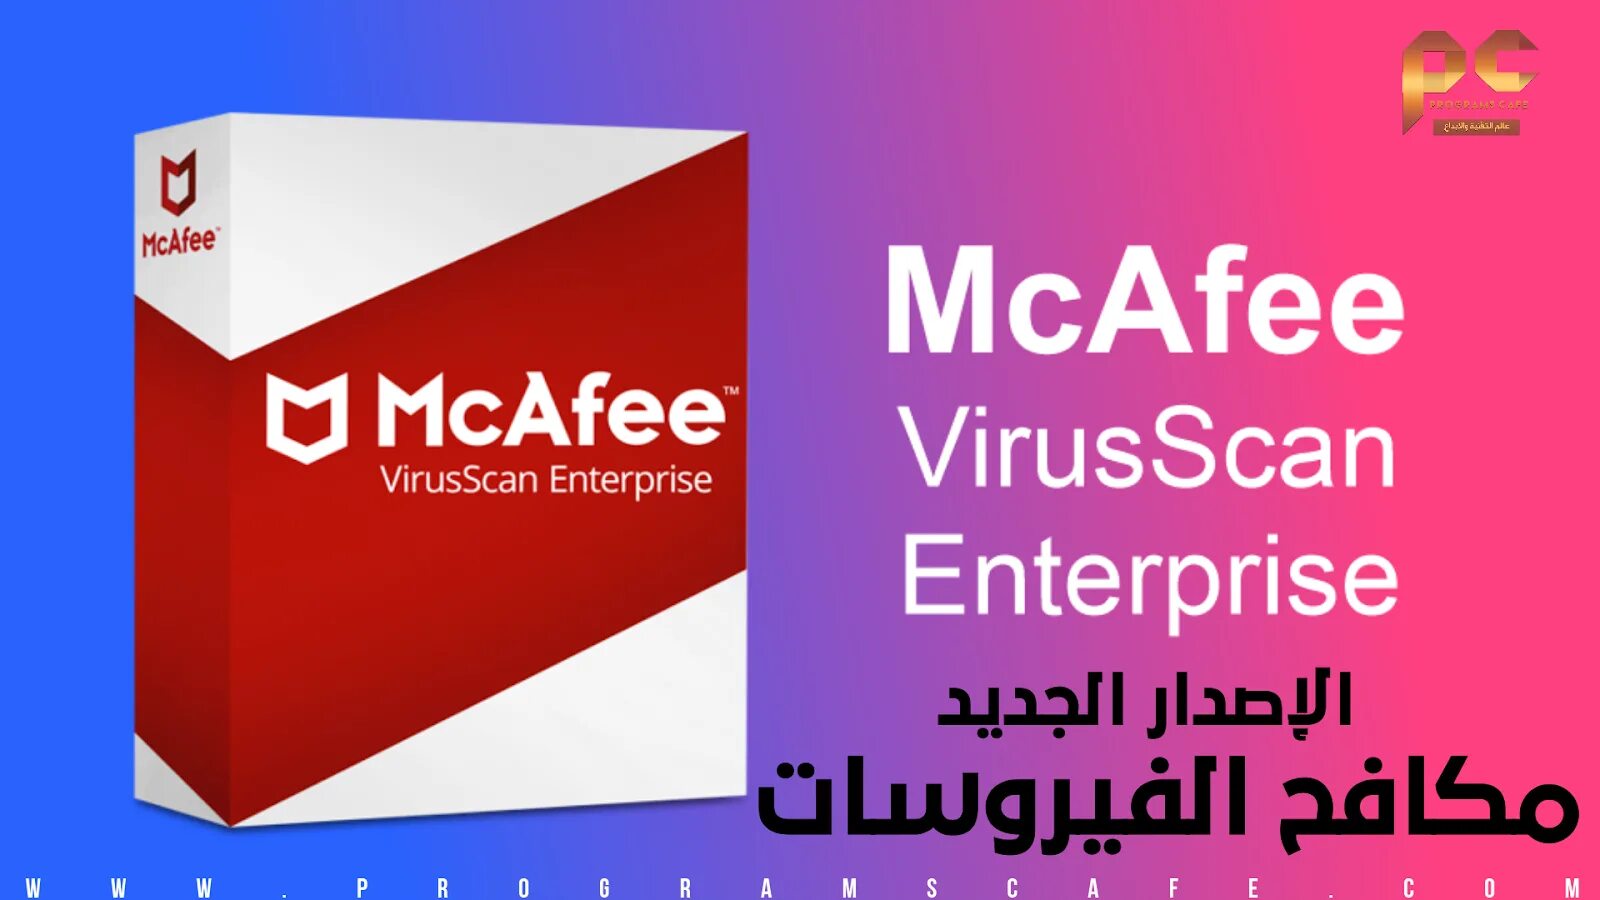 Mcafee browser. MCAFEE VIRUSSCAN (производитель: «MCAFEE Associates»).. MCAFEE VIRUSSCAN Enterprise (США). Антивирус MCAFEE VIRUSSCAN. MCAFEE® VIRUSSCAN Enterprise 8.8.